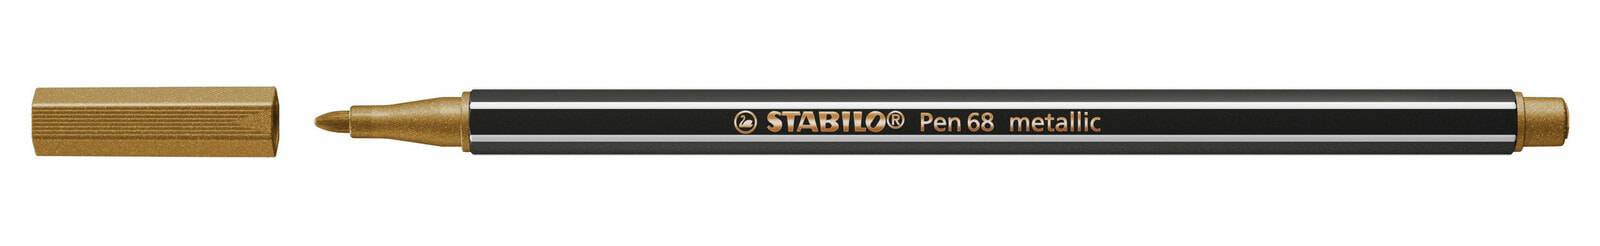 STABILO Pen 68 metallic фломастер Средний Медный 1 шт 68/820